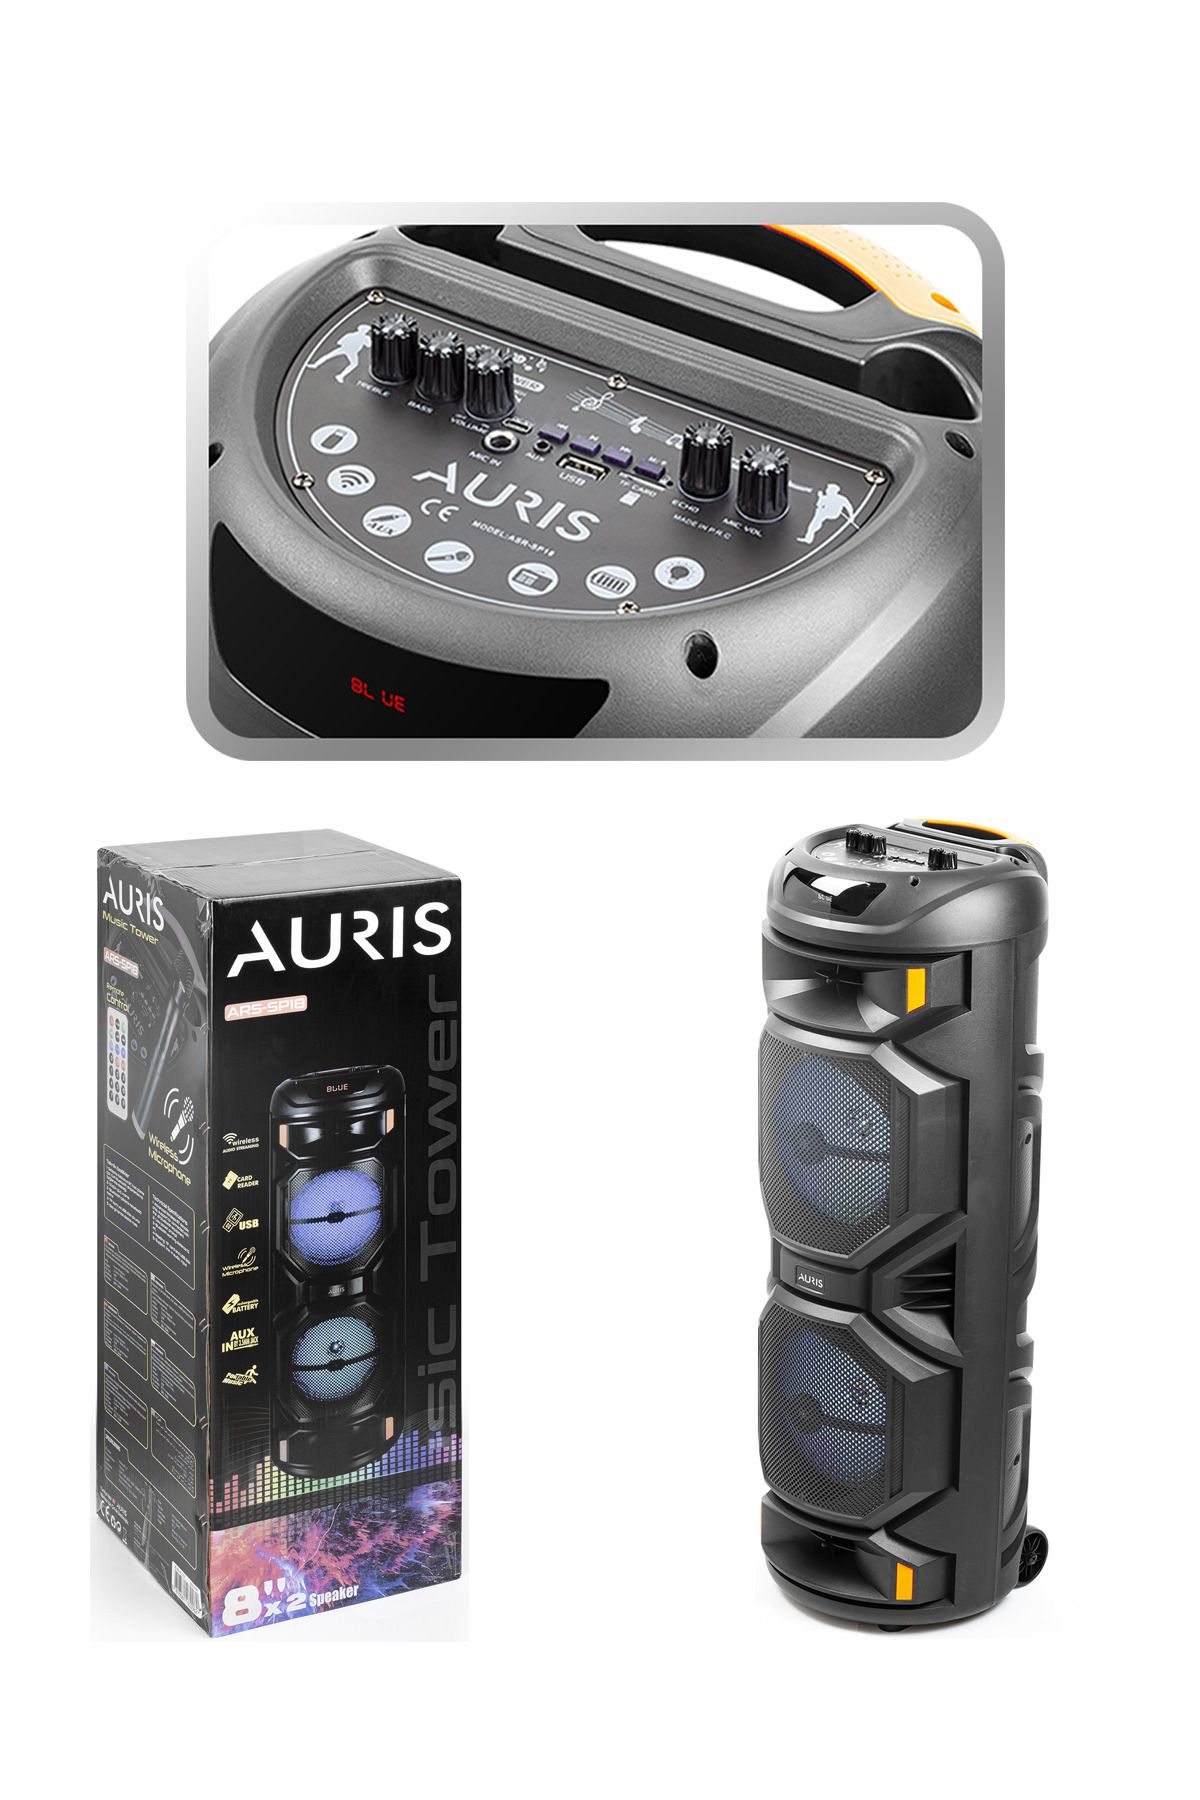 Auris 24w Parti 8x2 Inç Taşınabilir Rgb Renkli Kumandalı Mikrofonlu Büyük Boy Karaoke Bluetooth Hoparlör